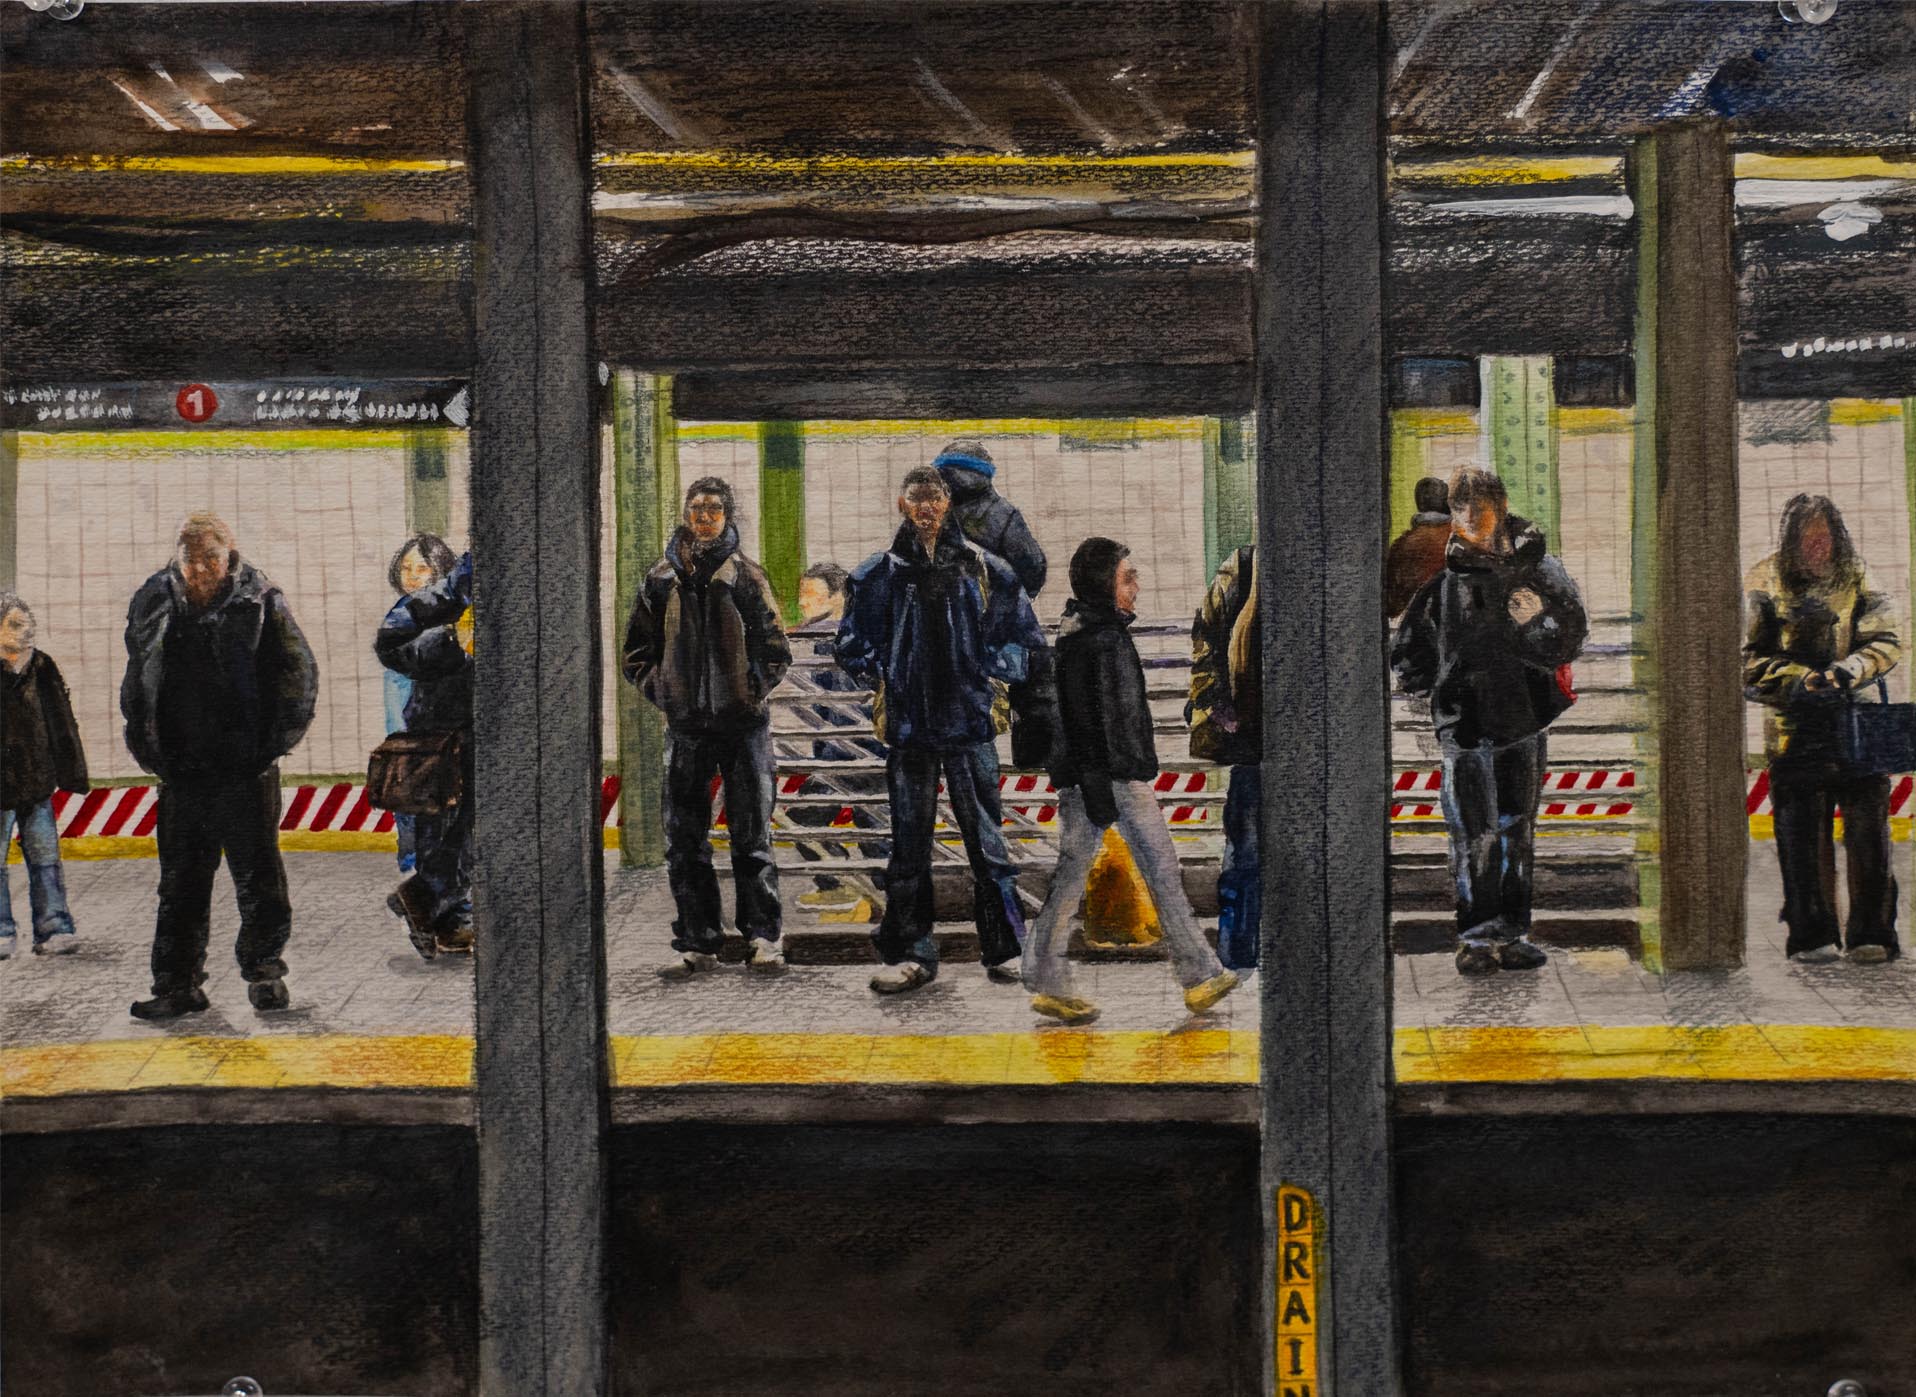 drawing of subway platform